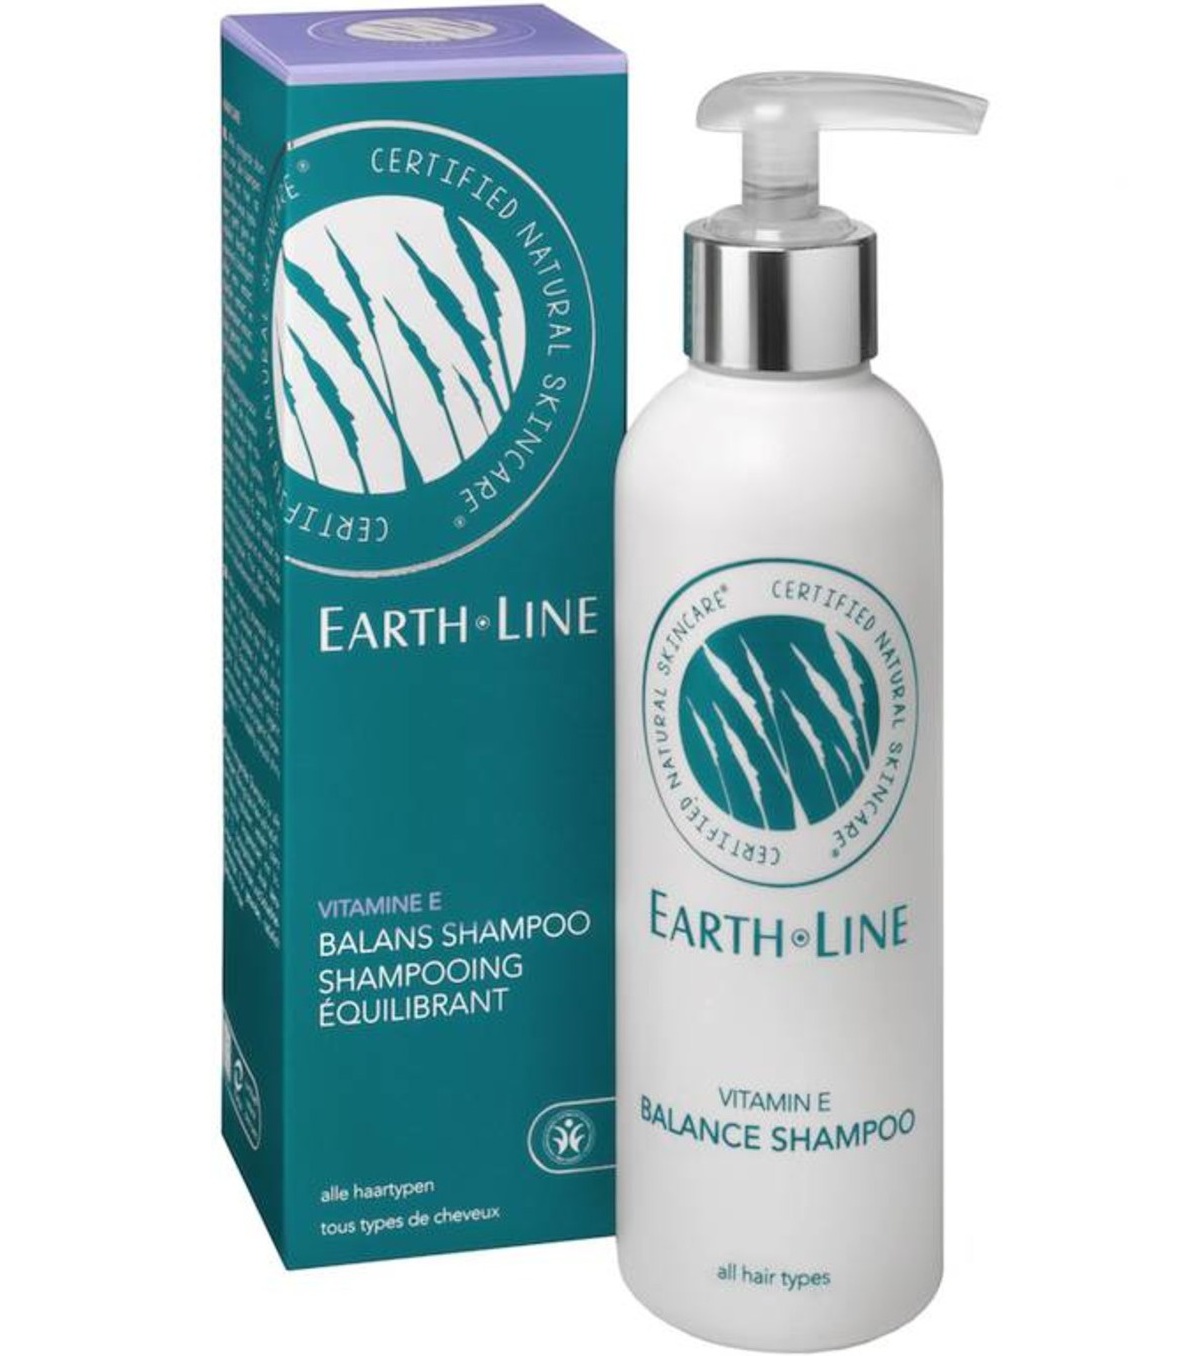 Earth-line Vitamine E Balans Shampoo